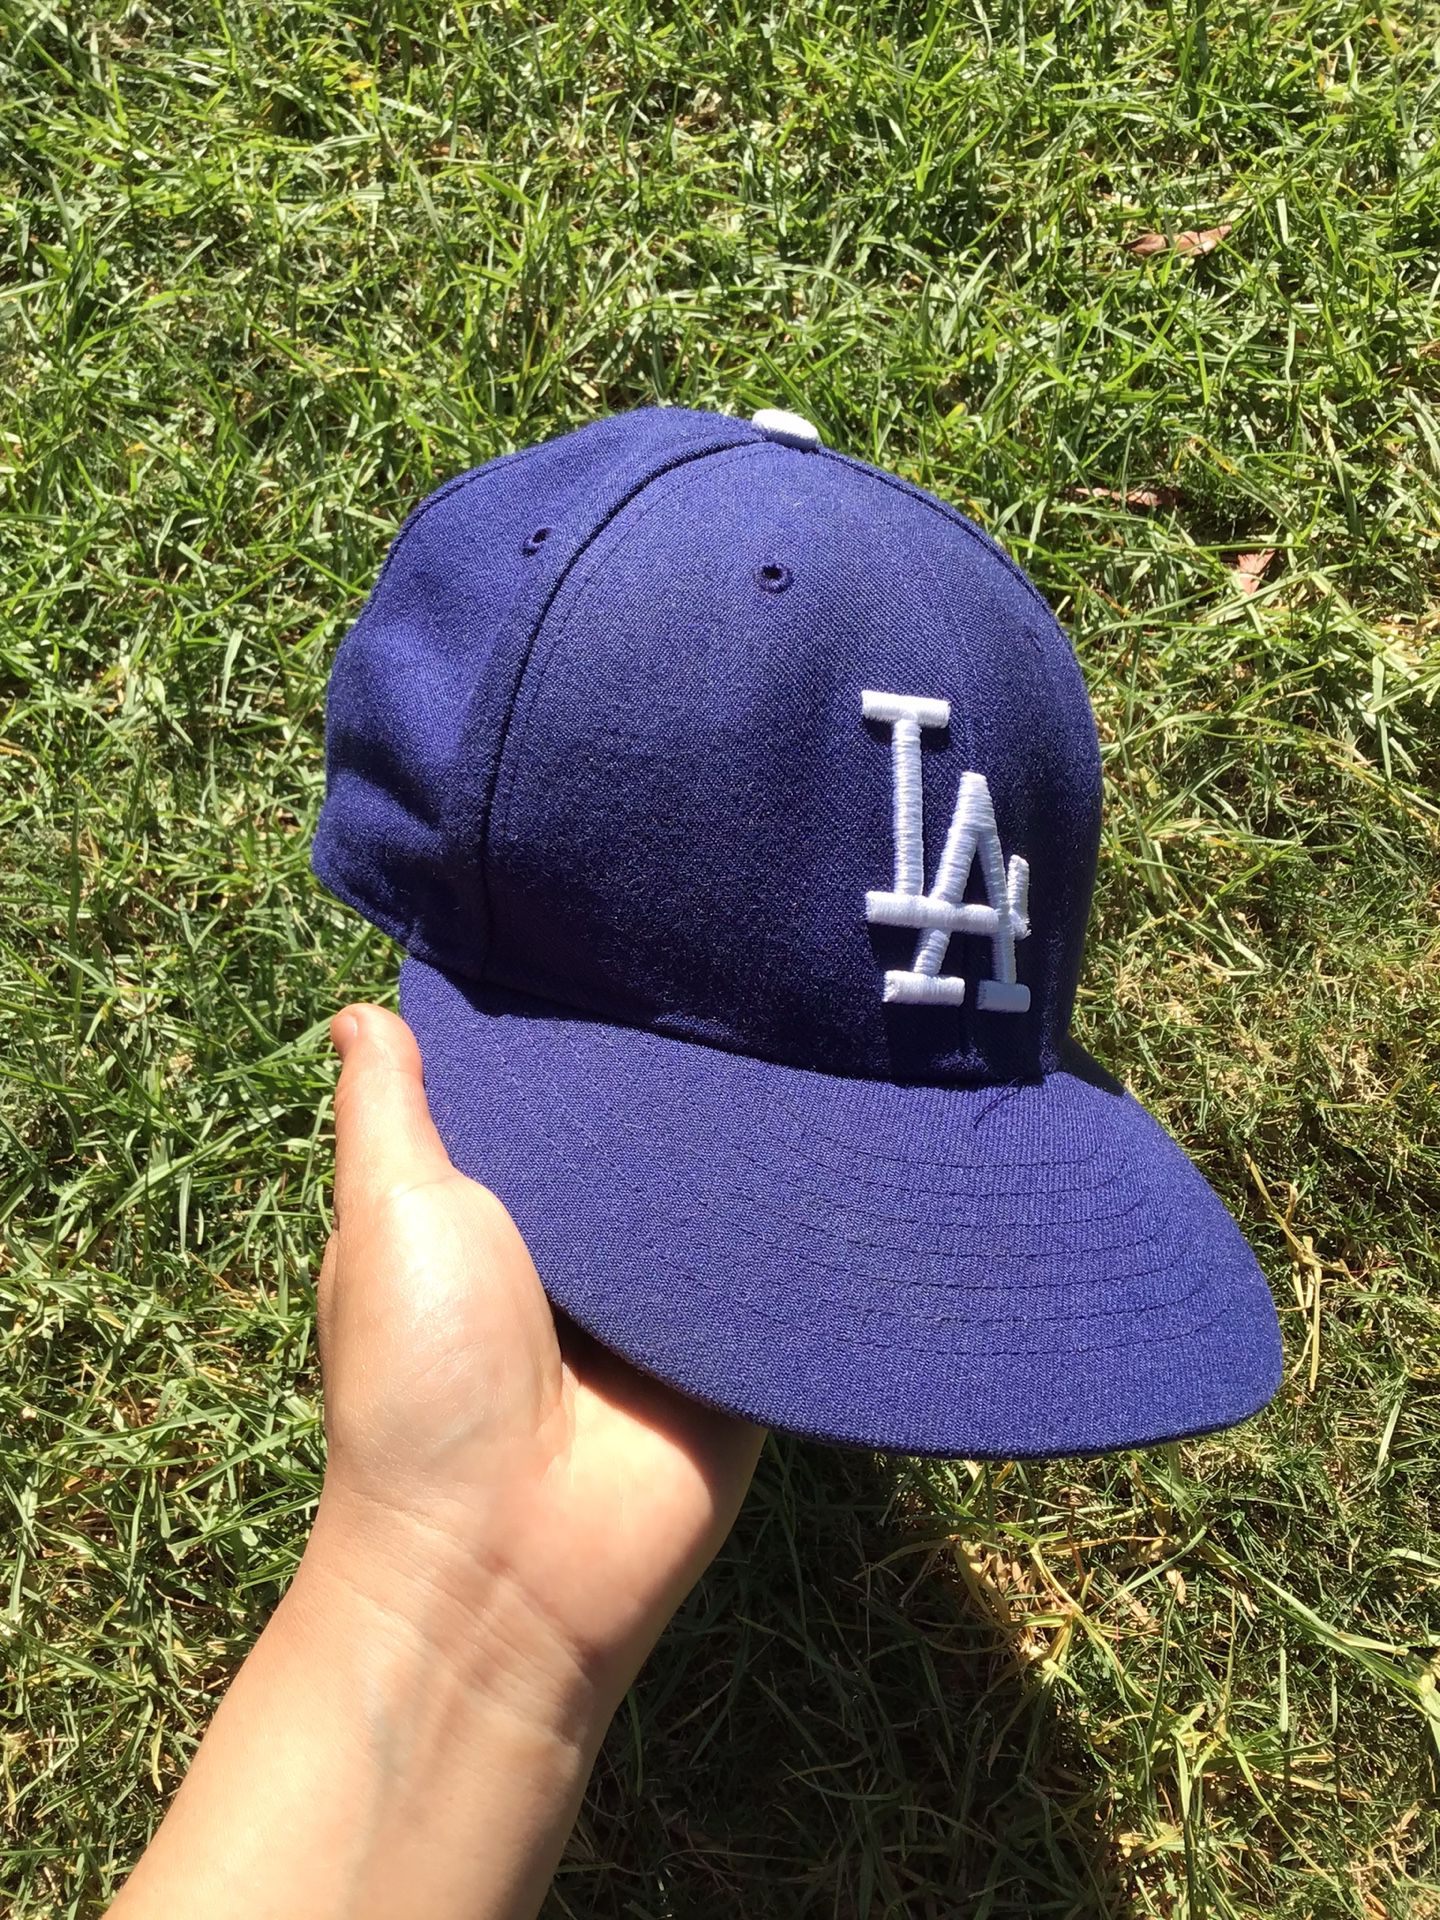 Royal Blue Los Angeles Dodgers Snapback Velcro Strap Hat Genuine Dodgers Merchandise 47 Brand Los Angeles Fan Shop Team Sports Hats Outdoors Fashion 